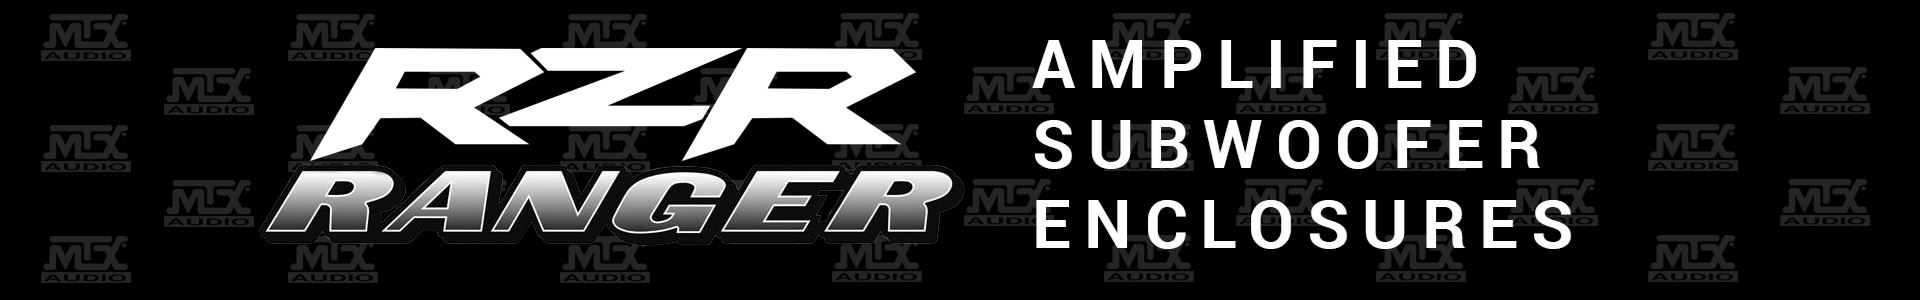 MTX Releases Polaris RZR & Ranger Amplified Subwoofer Enclosures